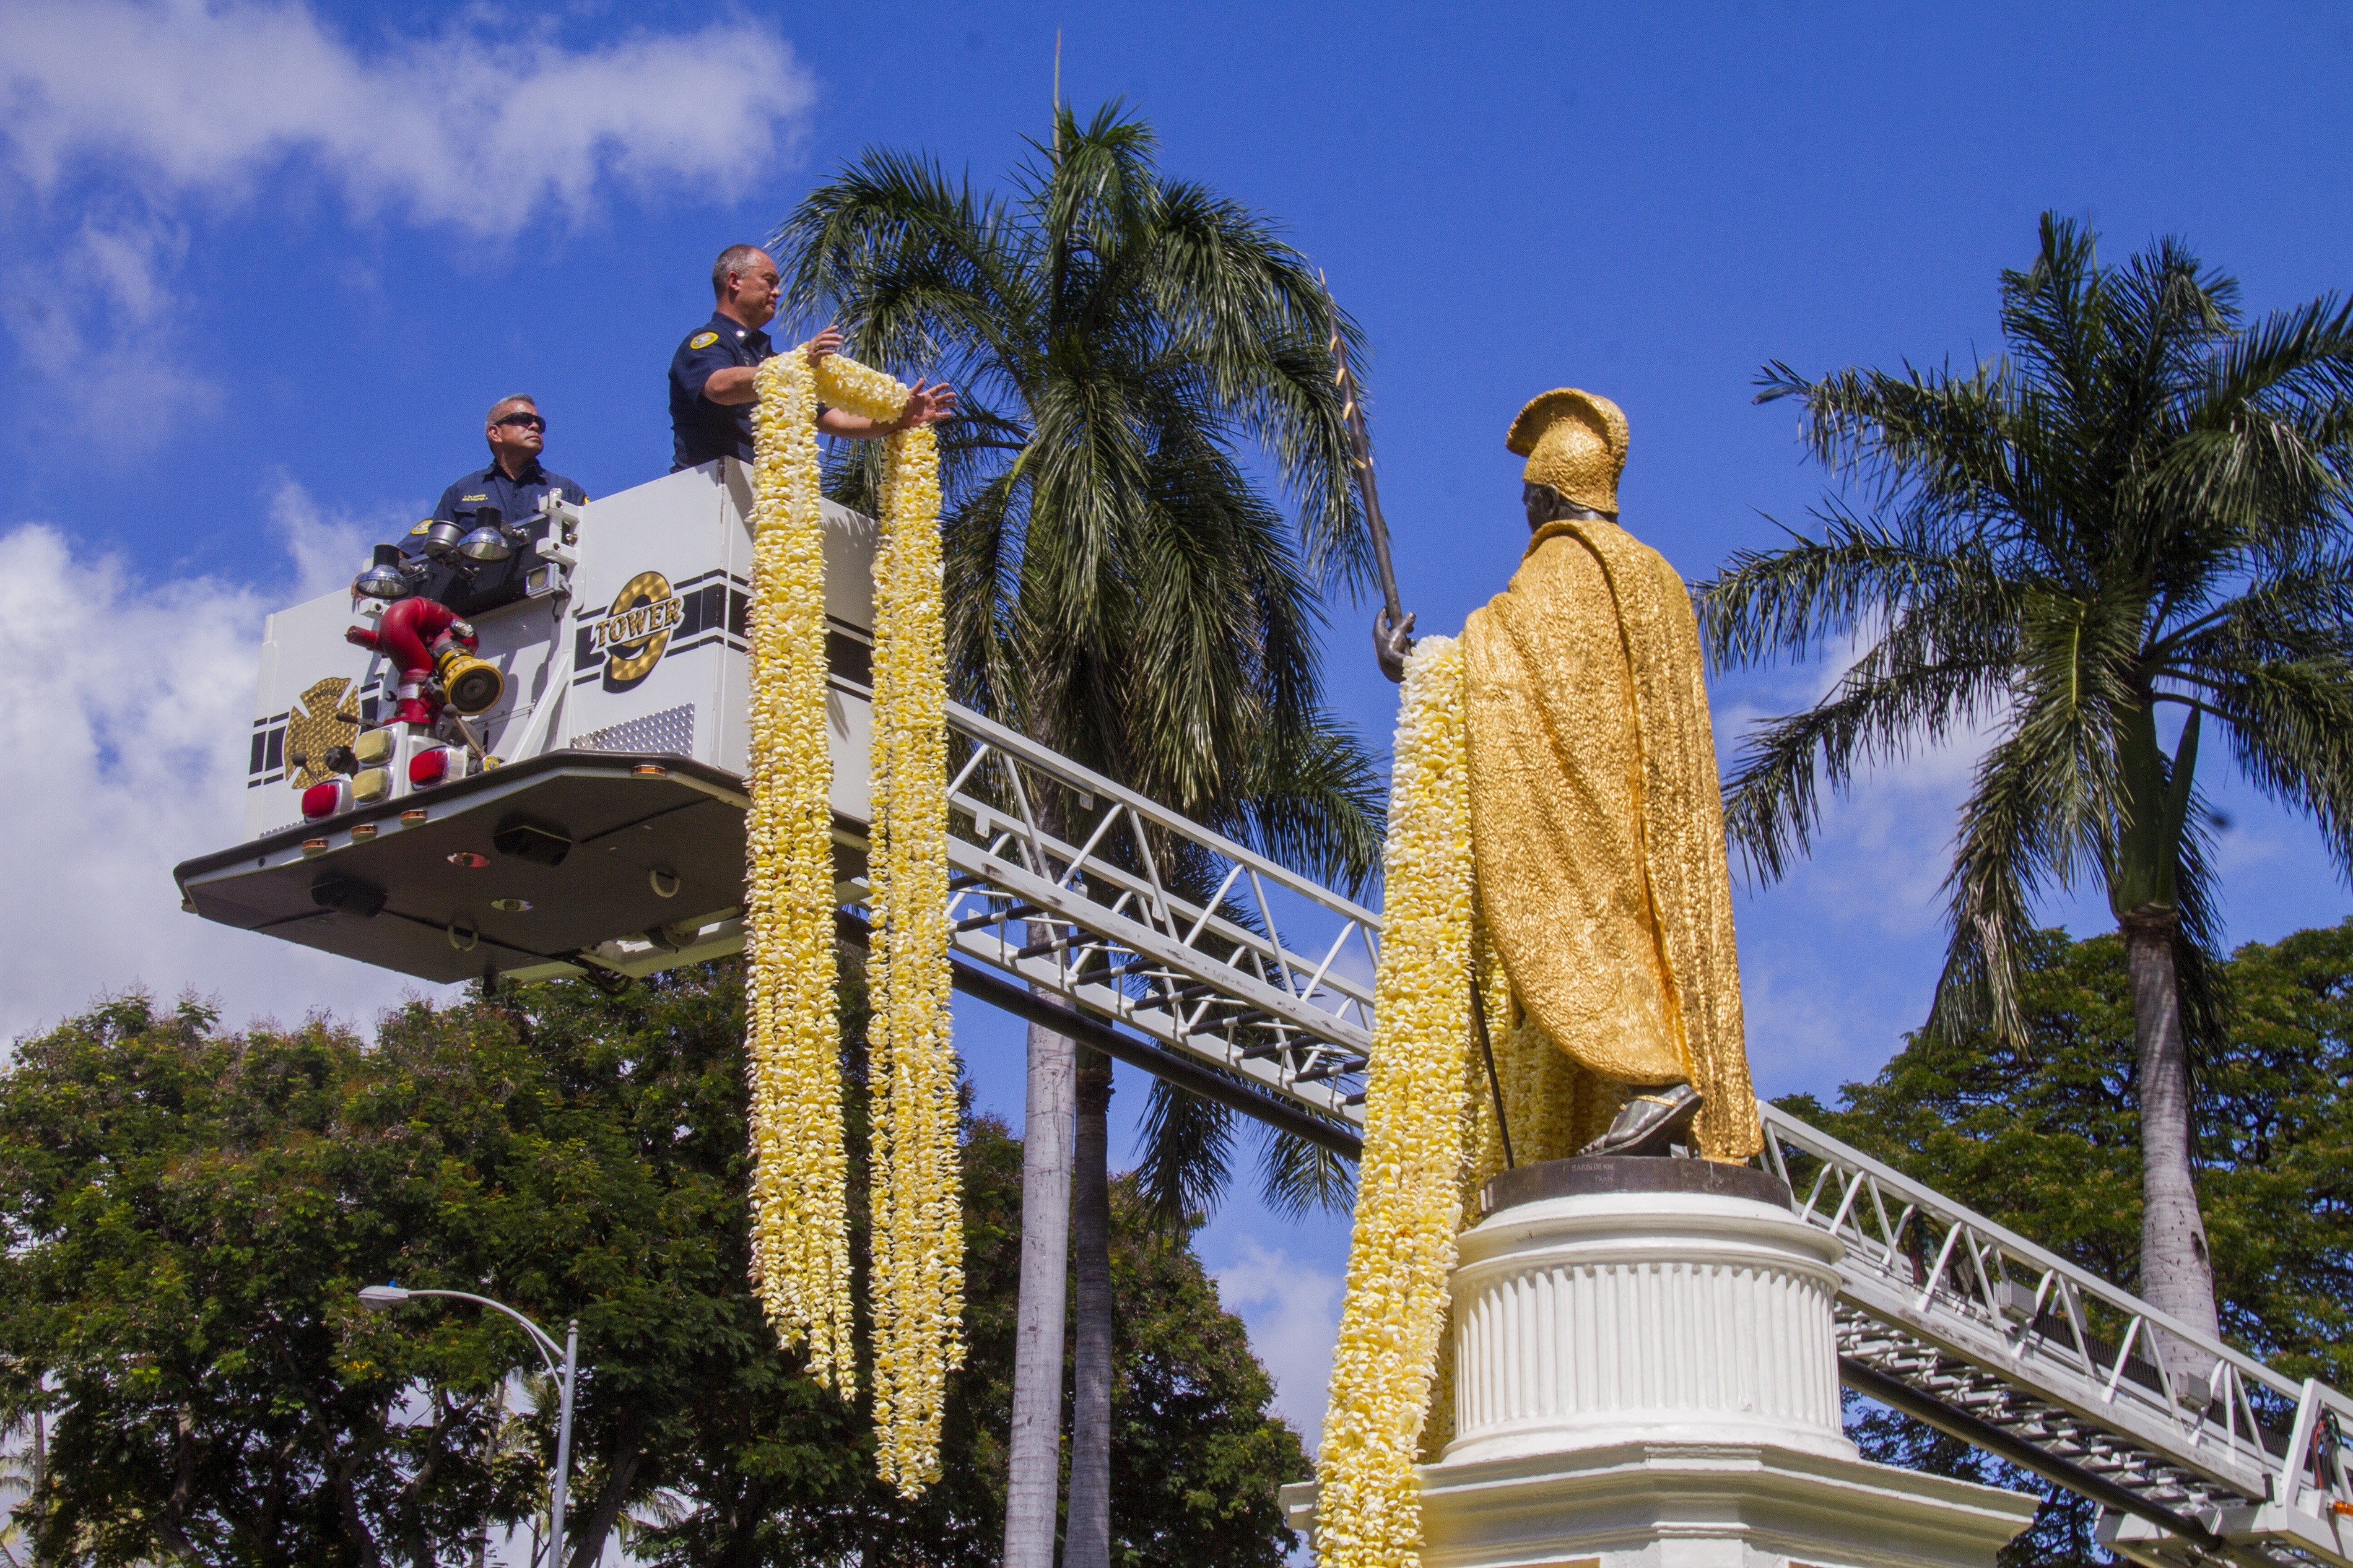 Workers drape lei on the King Kamehameha statue in Honolulu